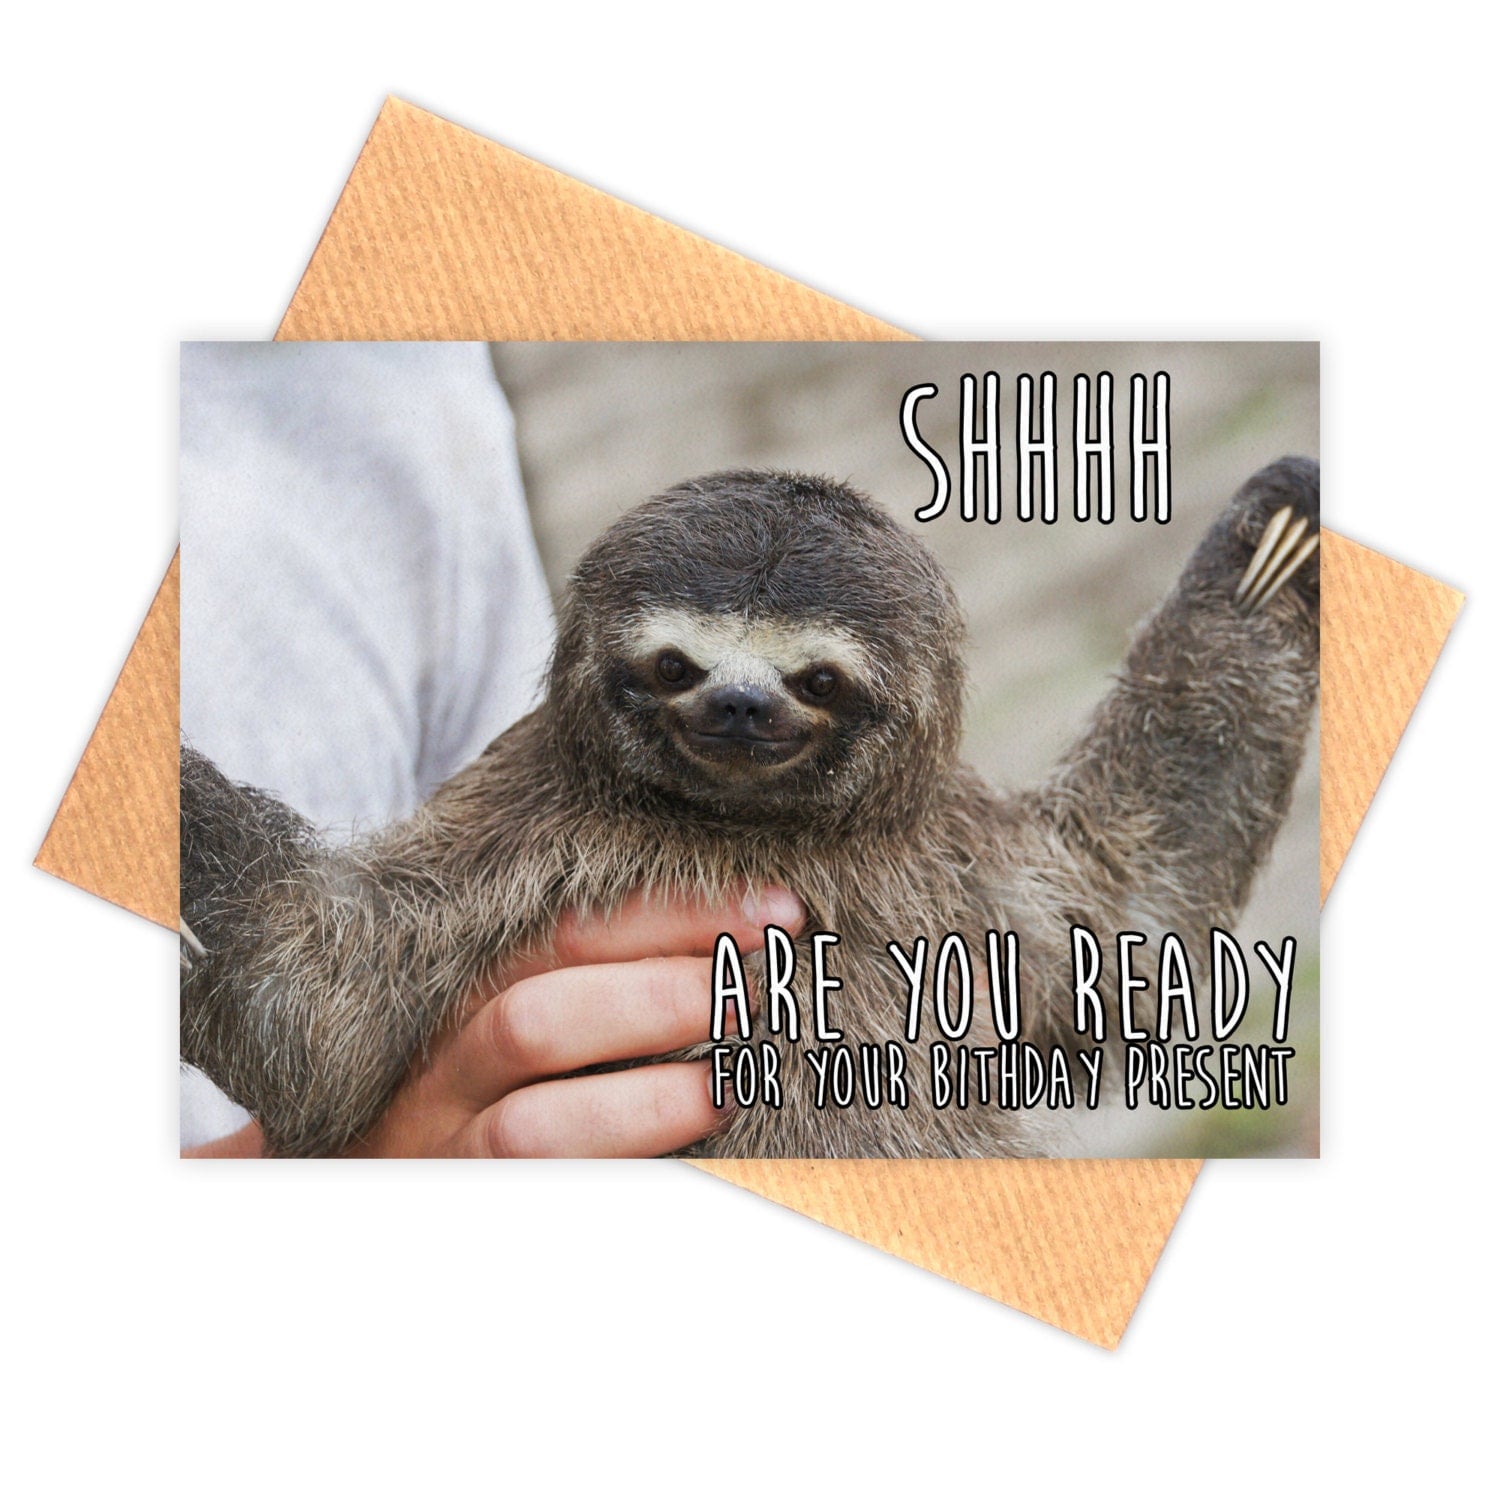 Sloth birthday present happy birthday card greeting by Memeskins